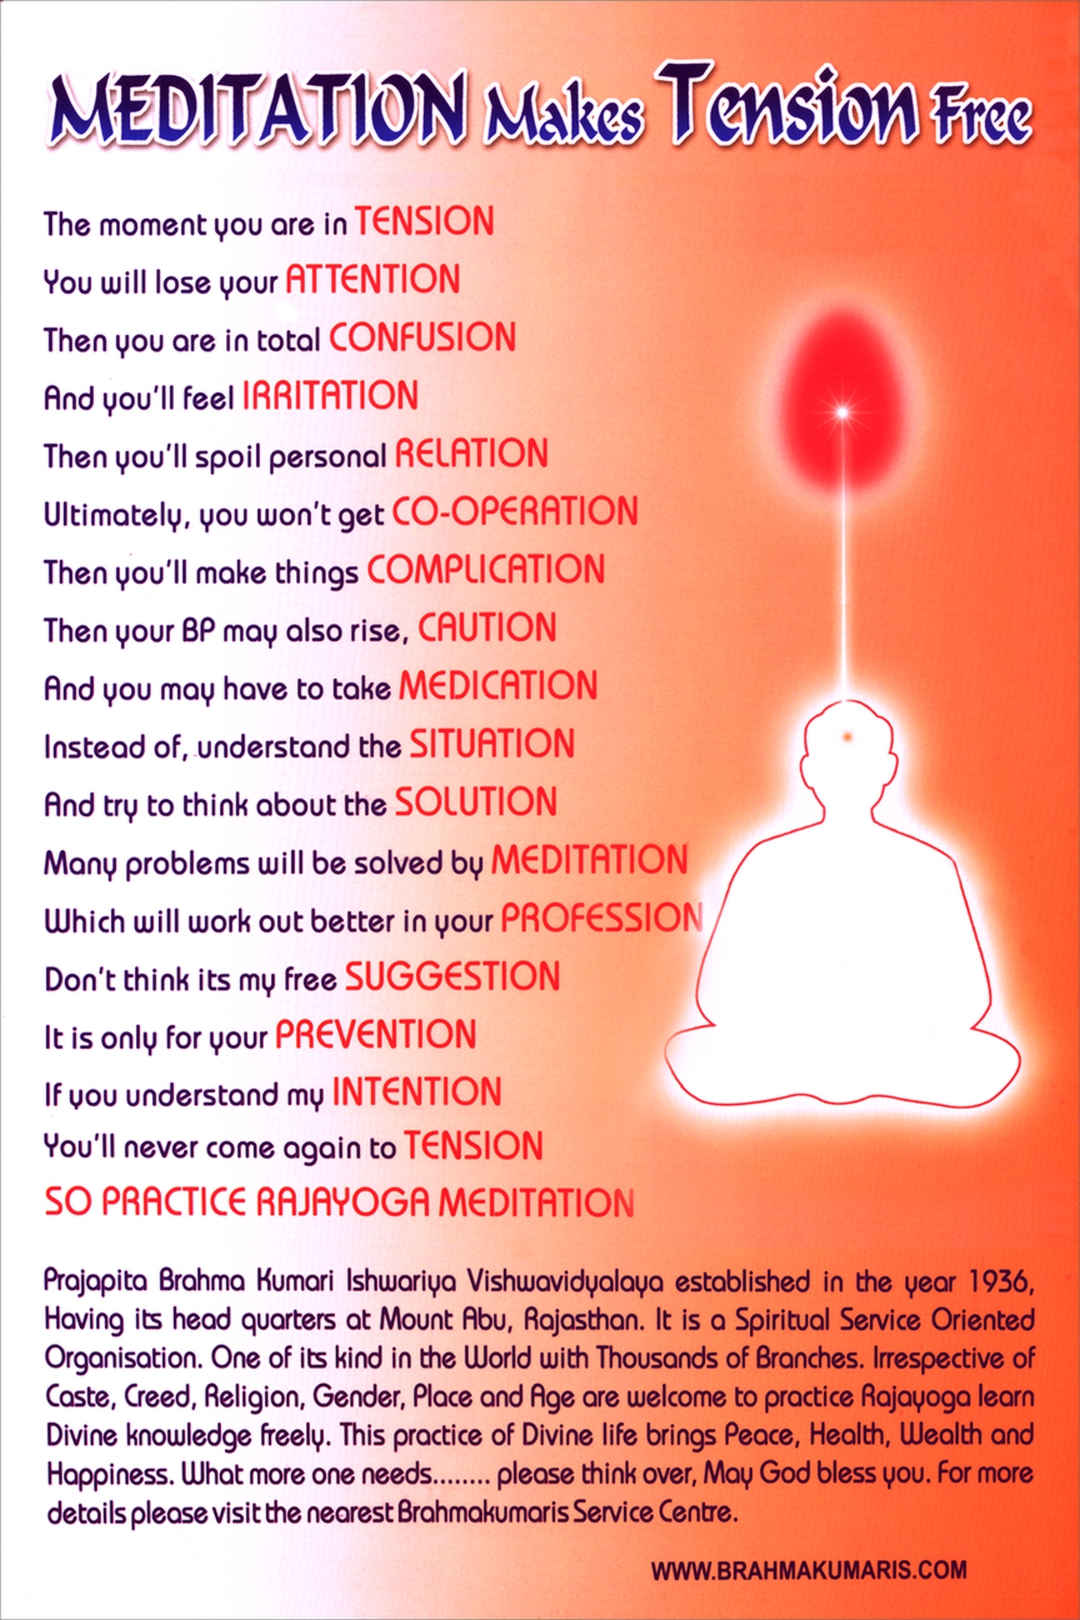 Meditation makes tension free